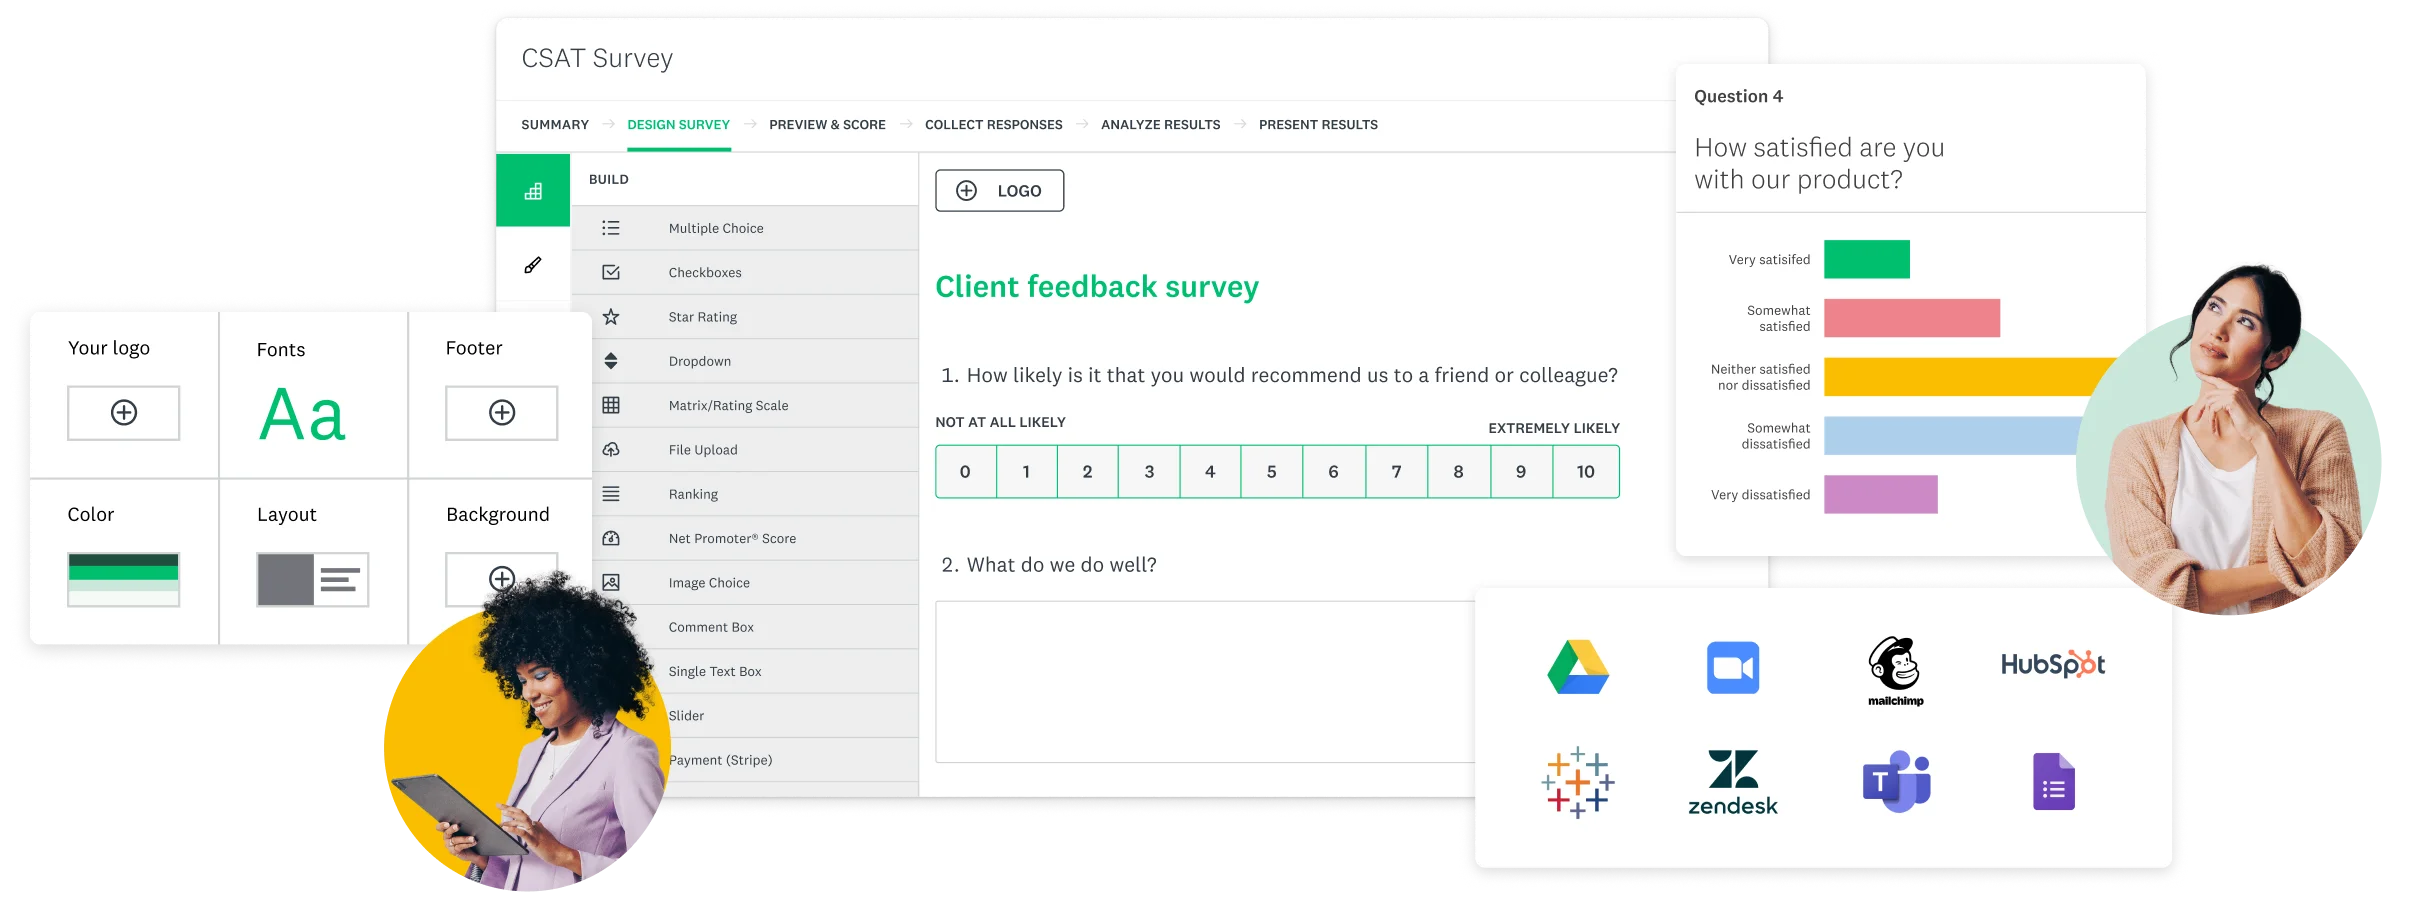 SurveyMonkey: The World's Most Popular Free Online Survey Tool